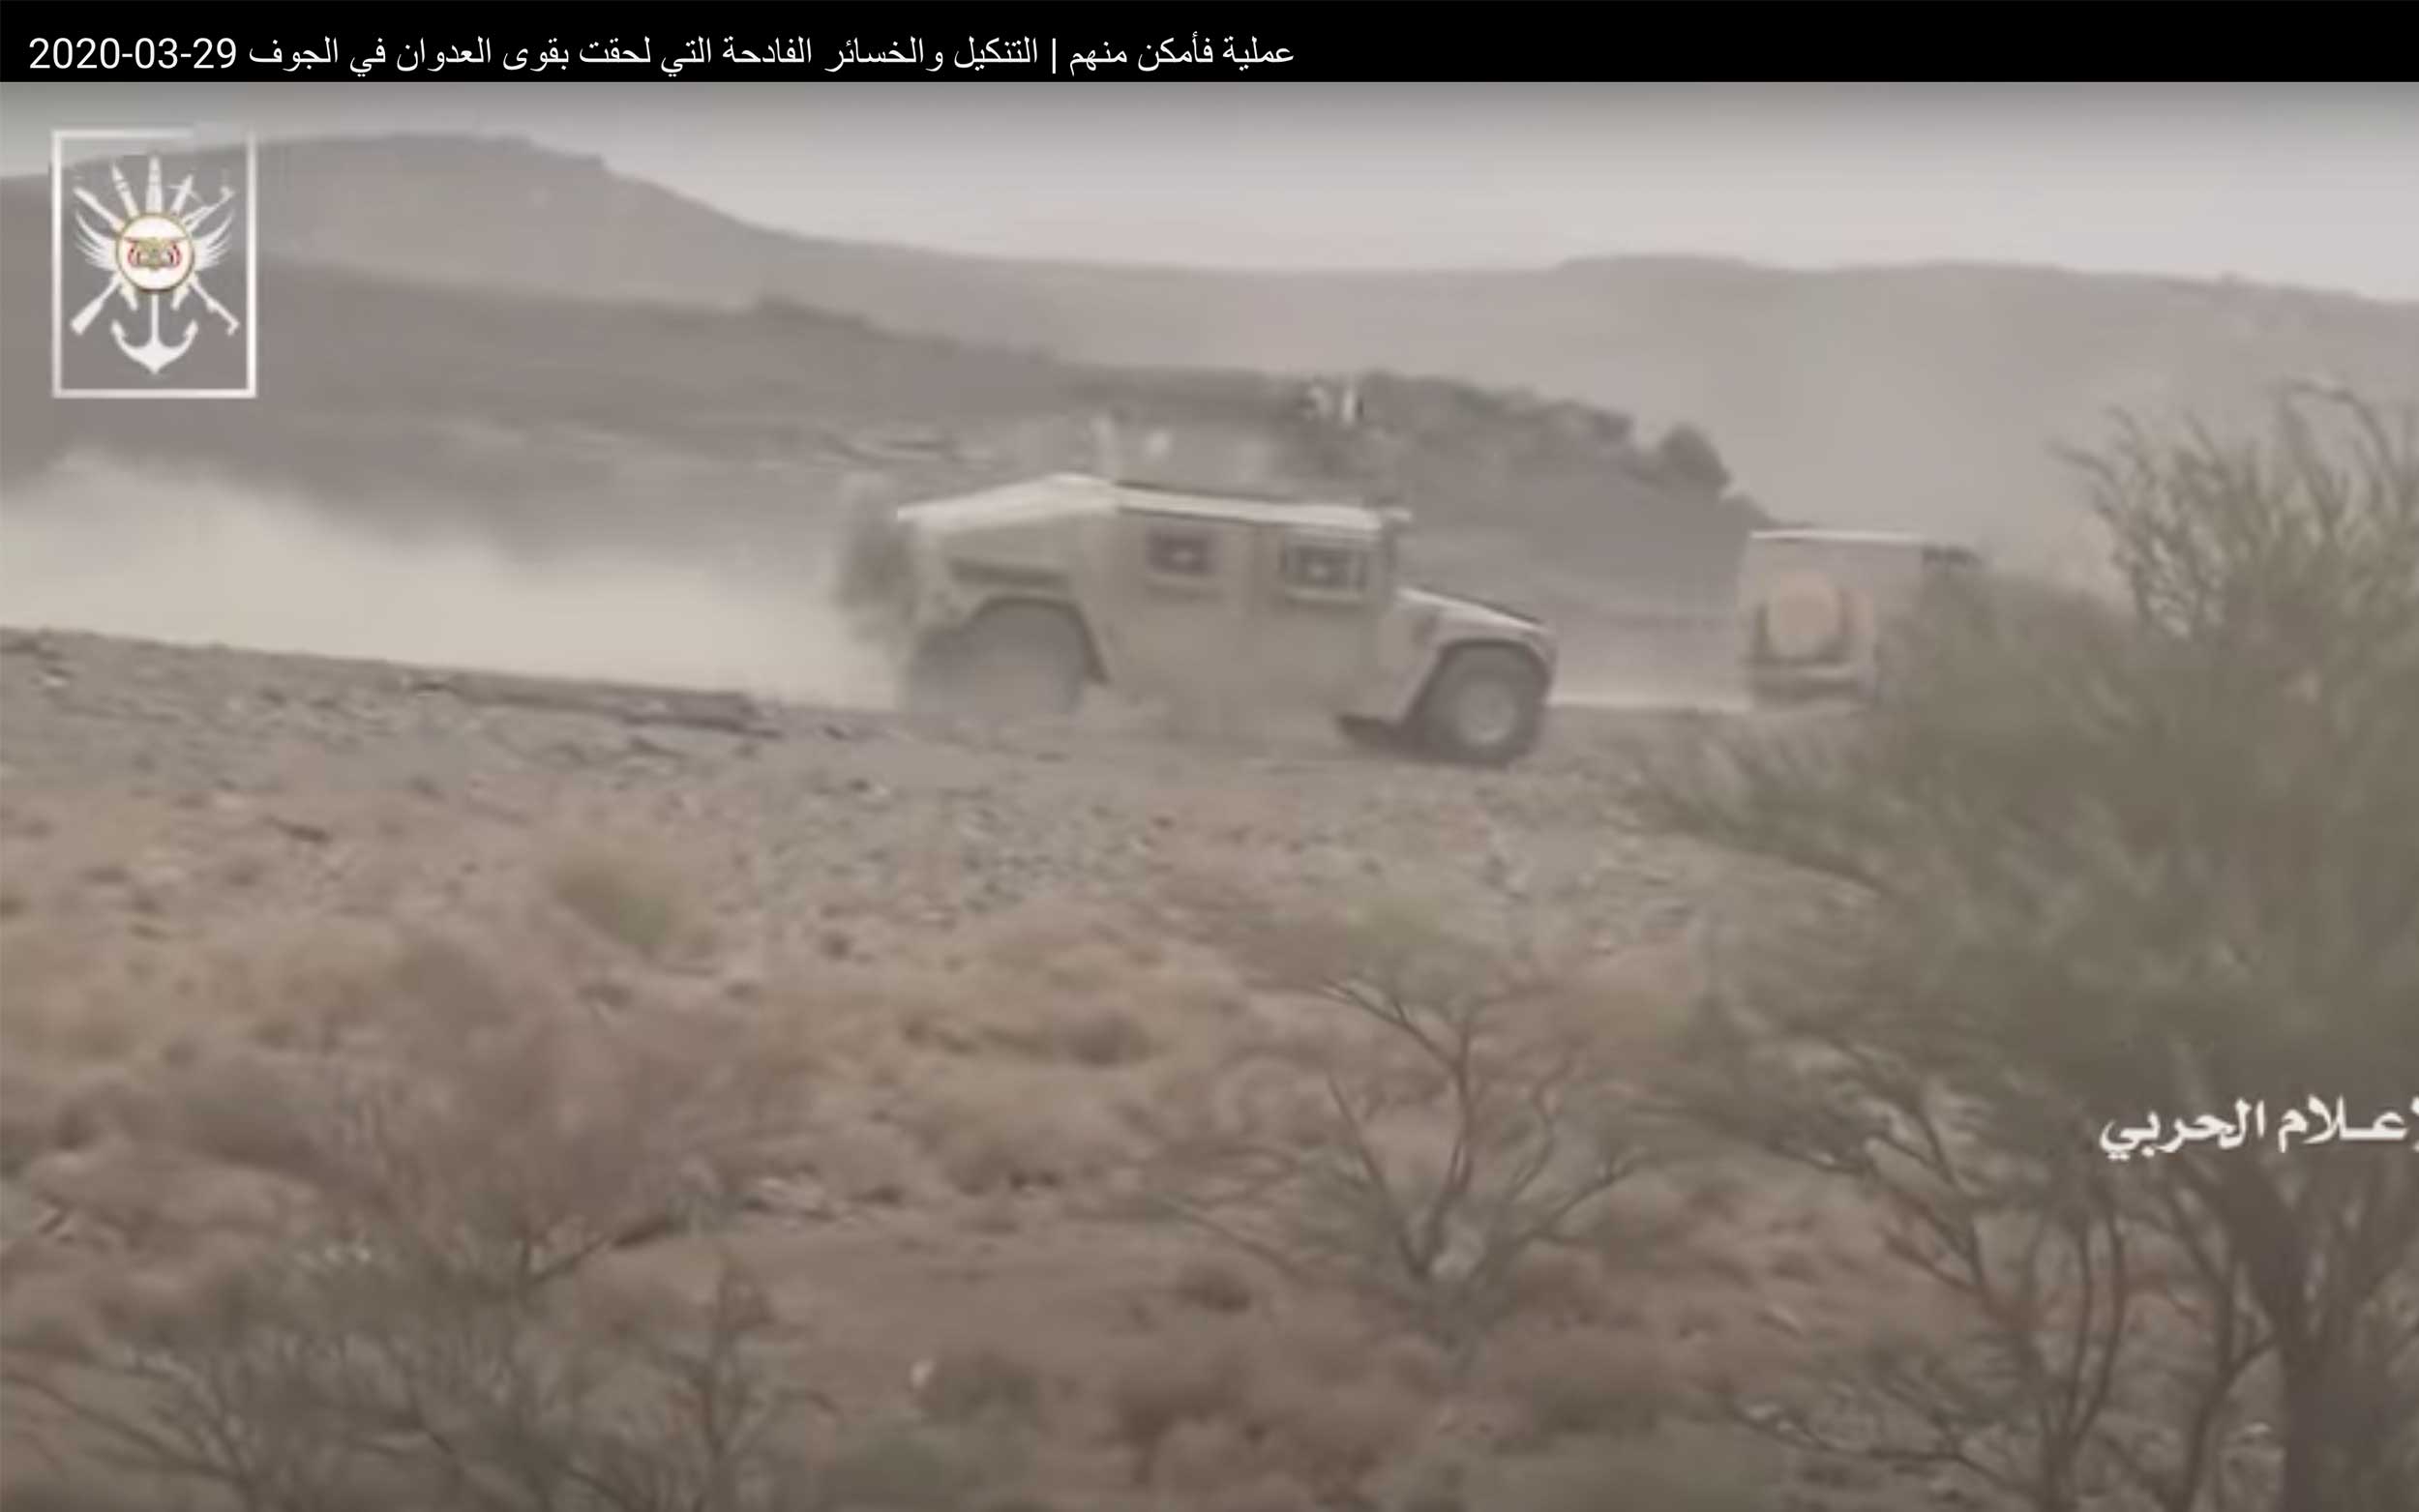 humvee-M1151A1B1-yemen-youtube-identification.jpg